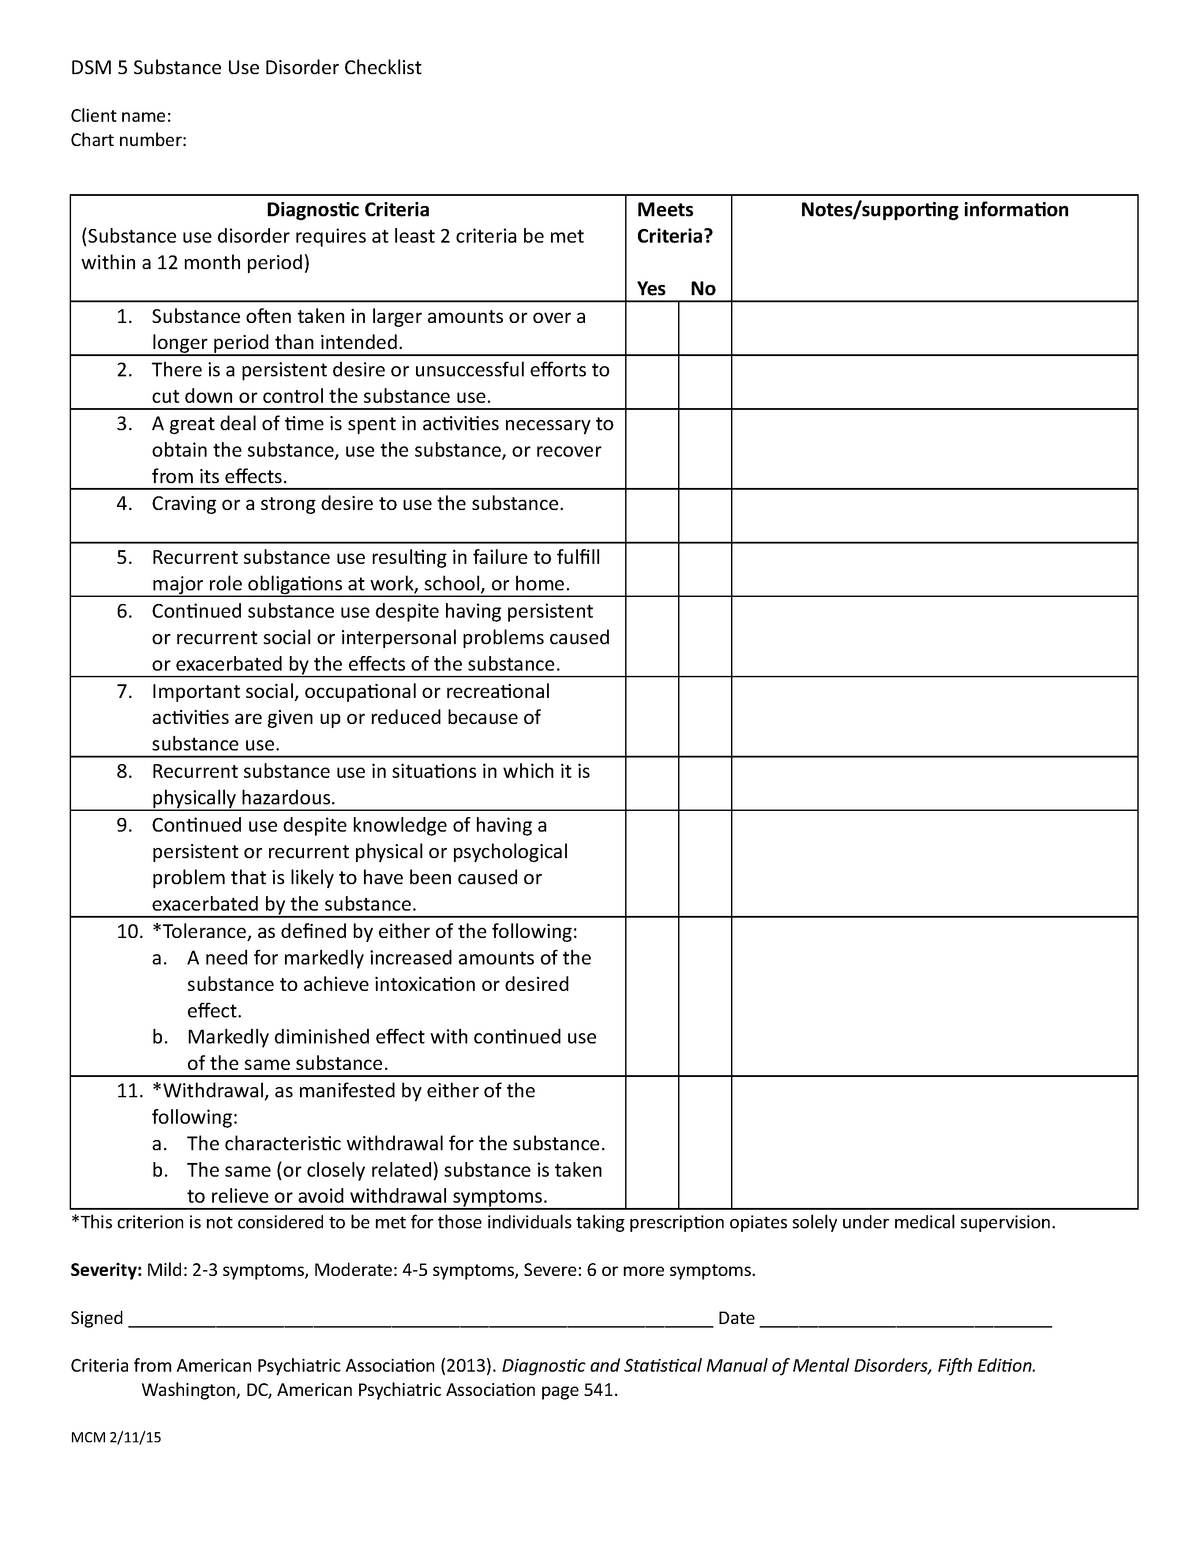 dsm 5 ptsd criteria checklist apa